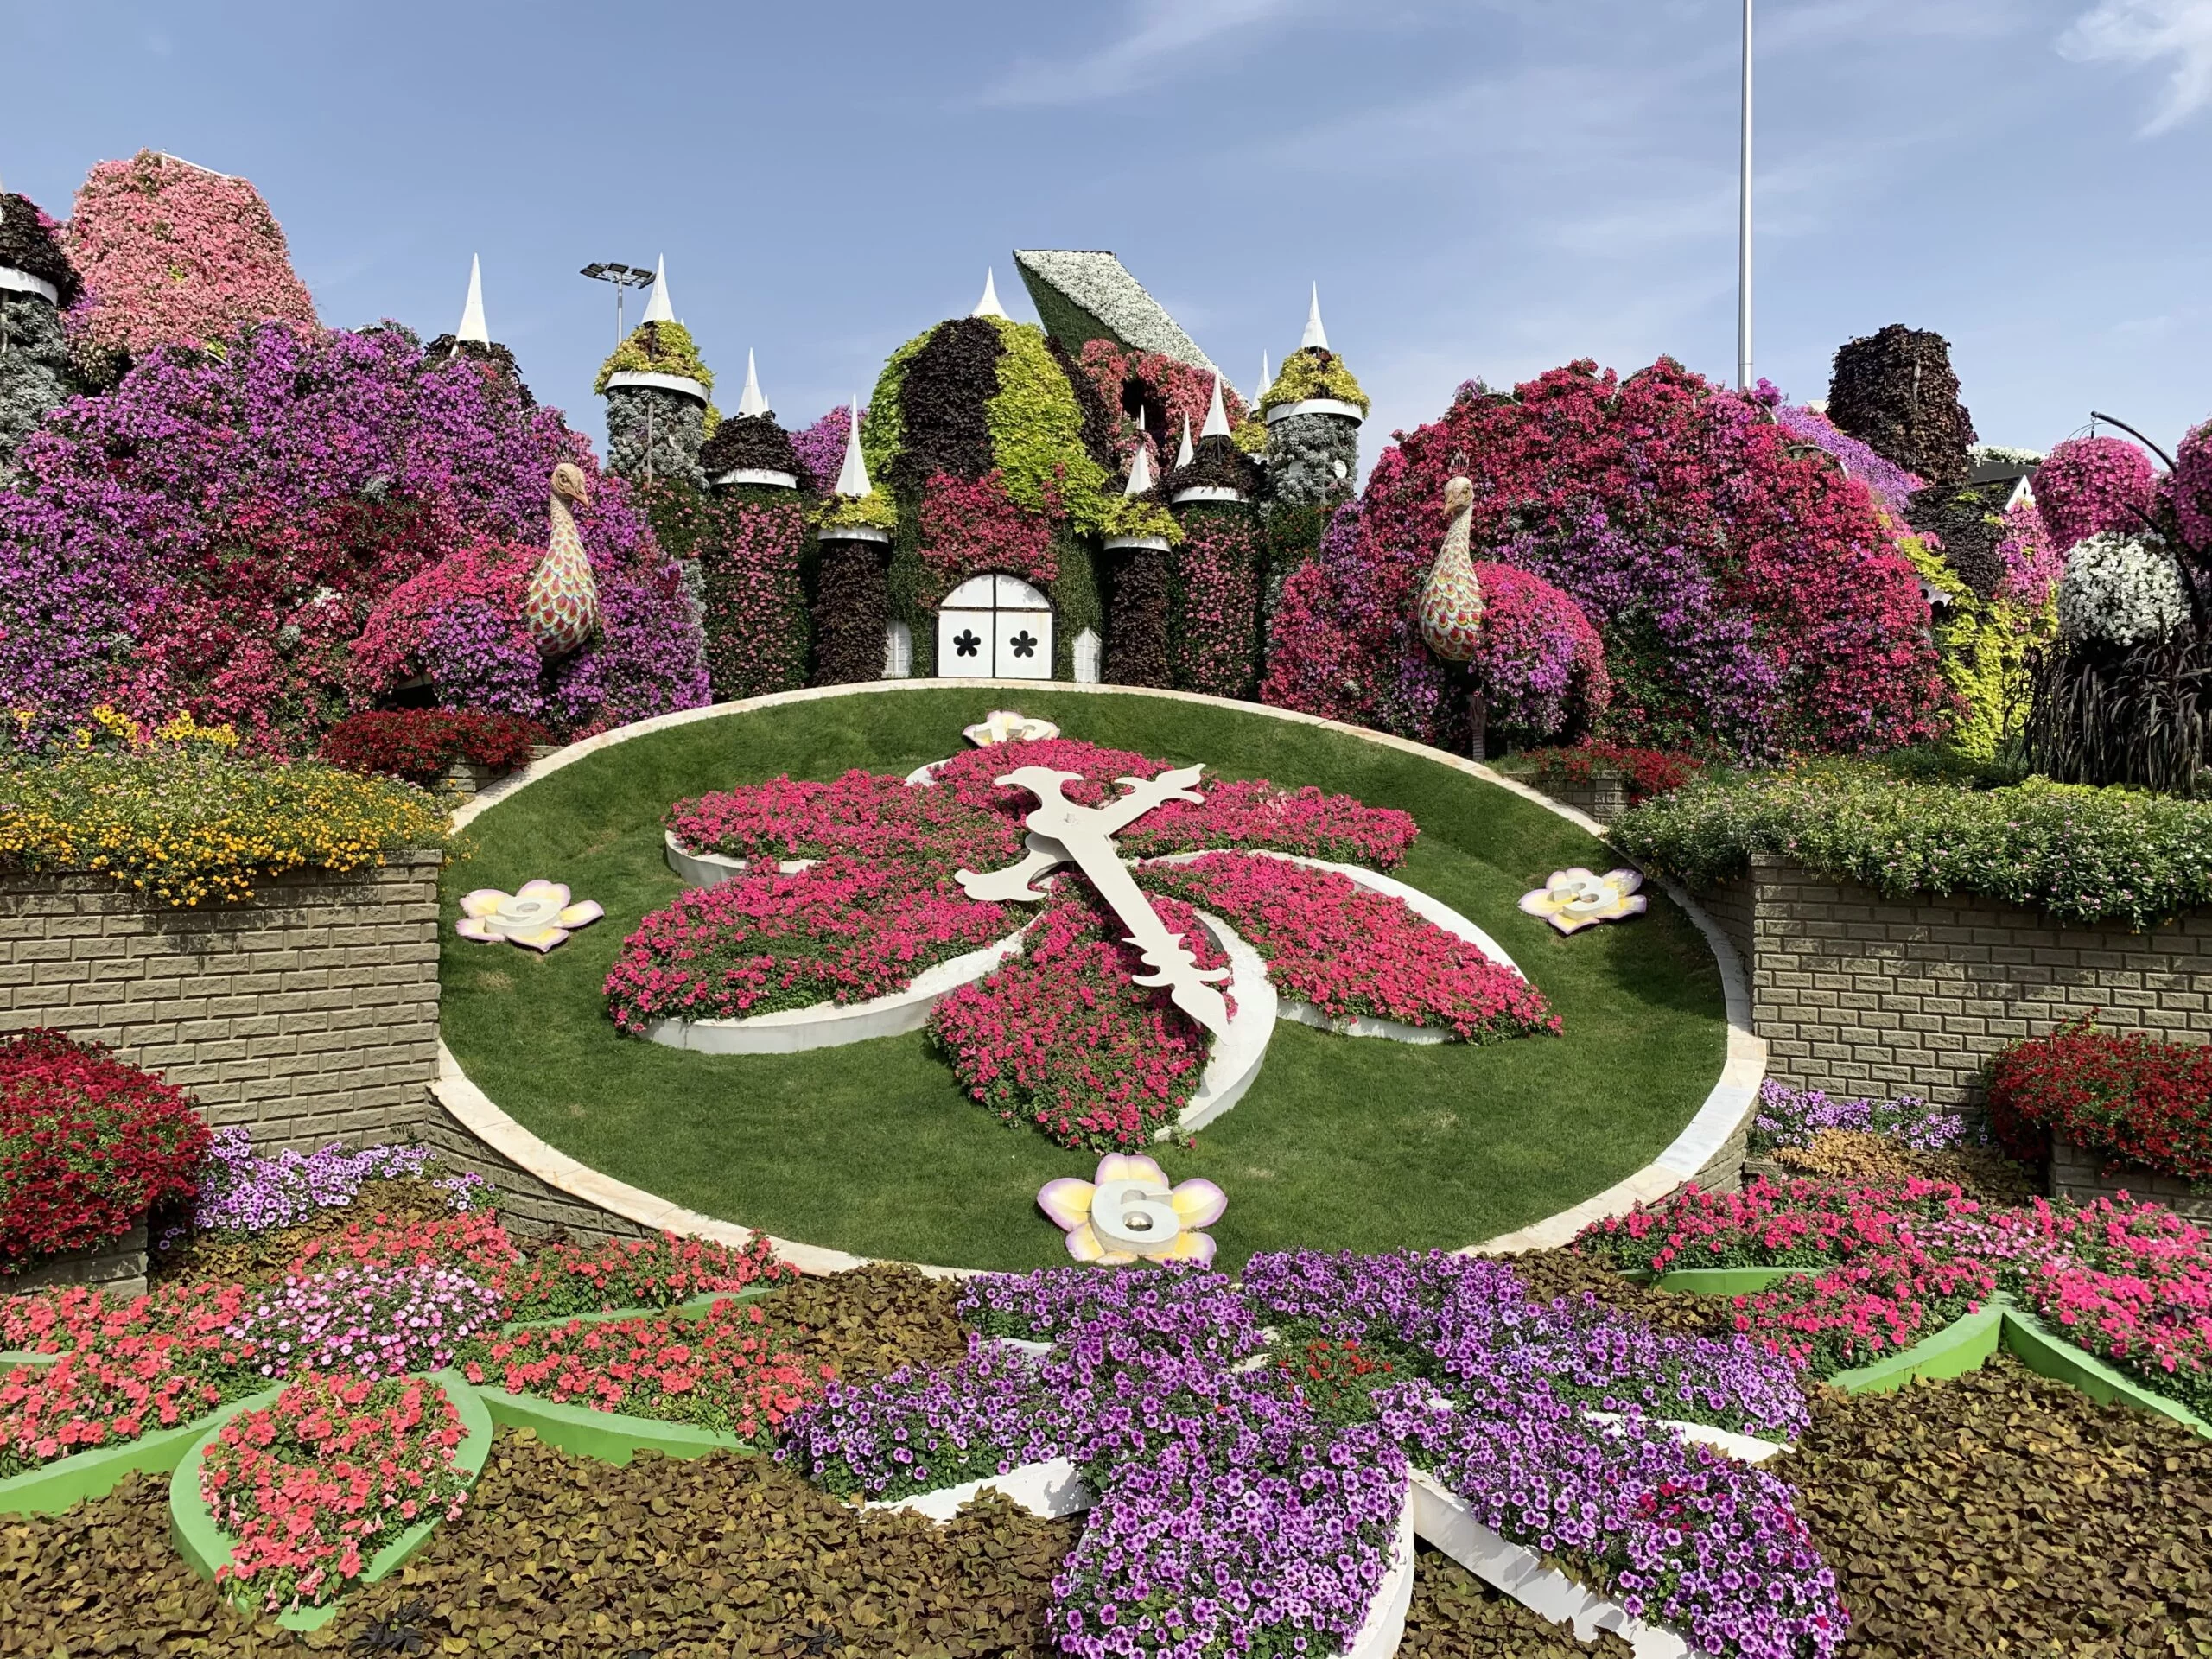 Floral Clocks at Miracle Garden Dubai